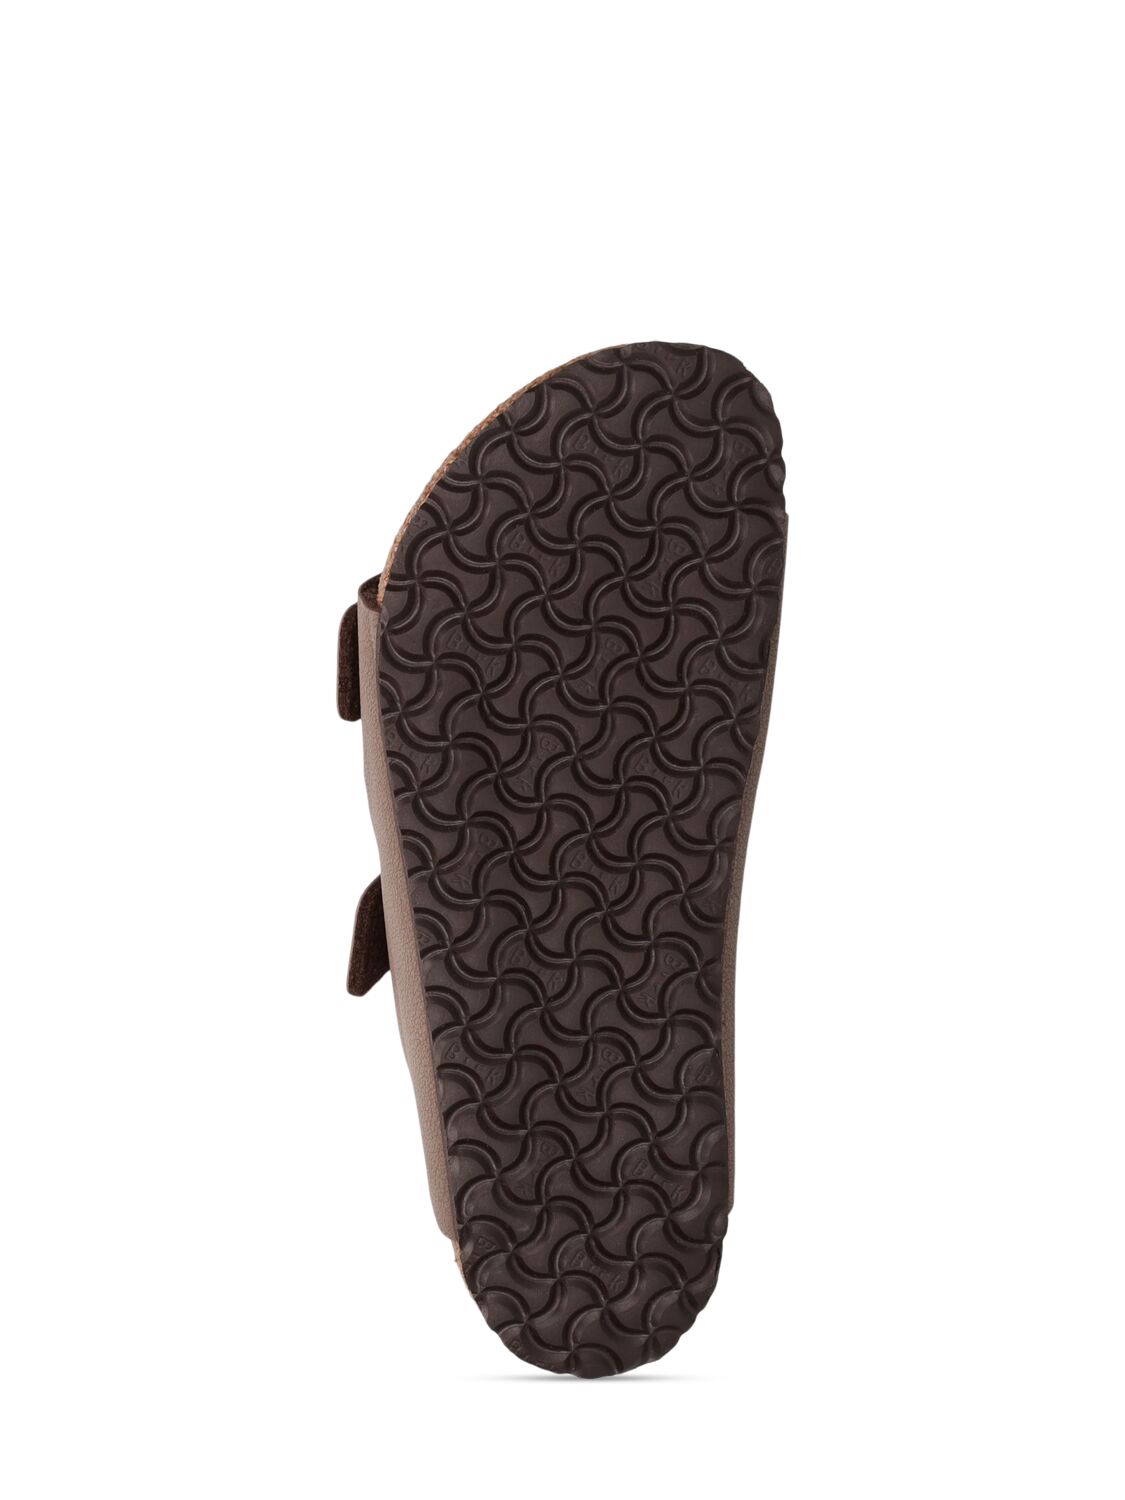 Shop Birkenstock Arizona Faux Leather Sandals In Brown